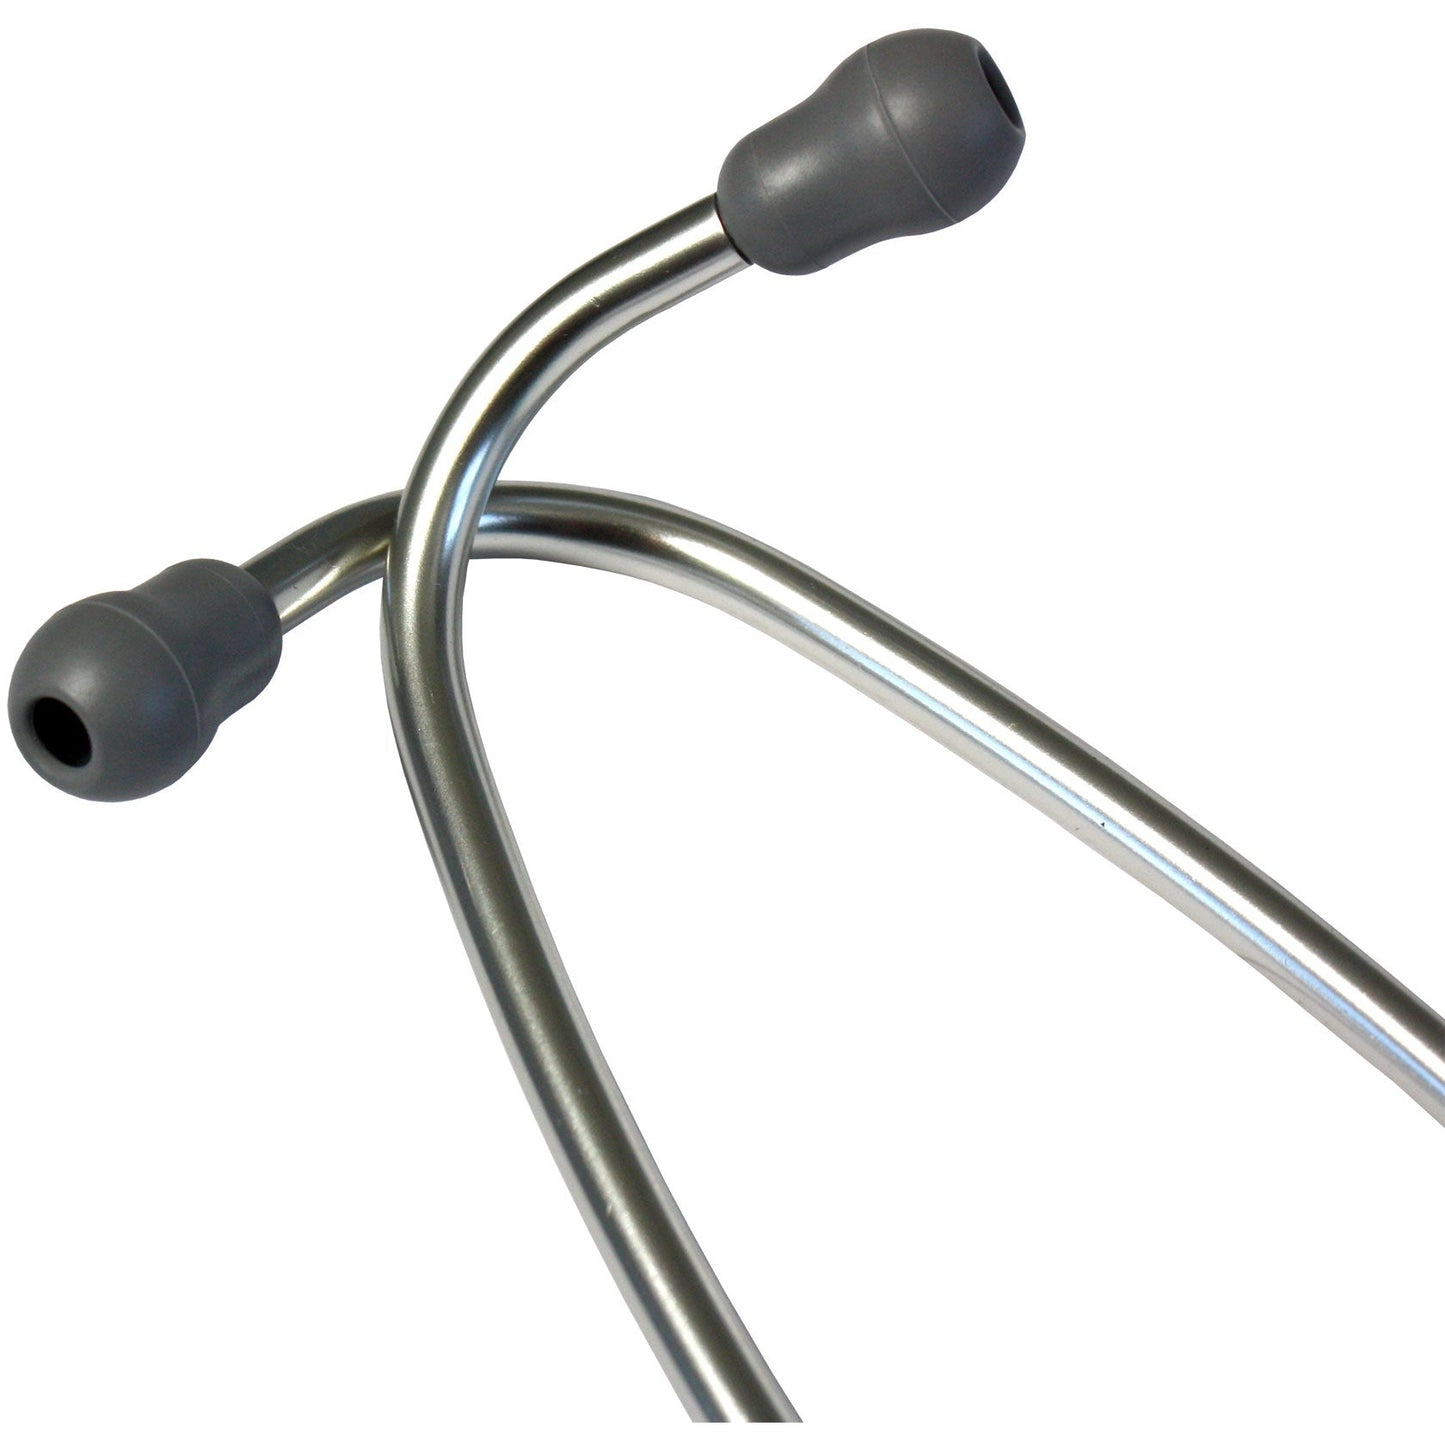 Littmann Classic III Stethoscope: Pearl Pink 5633